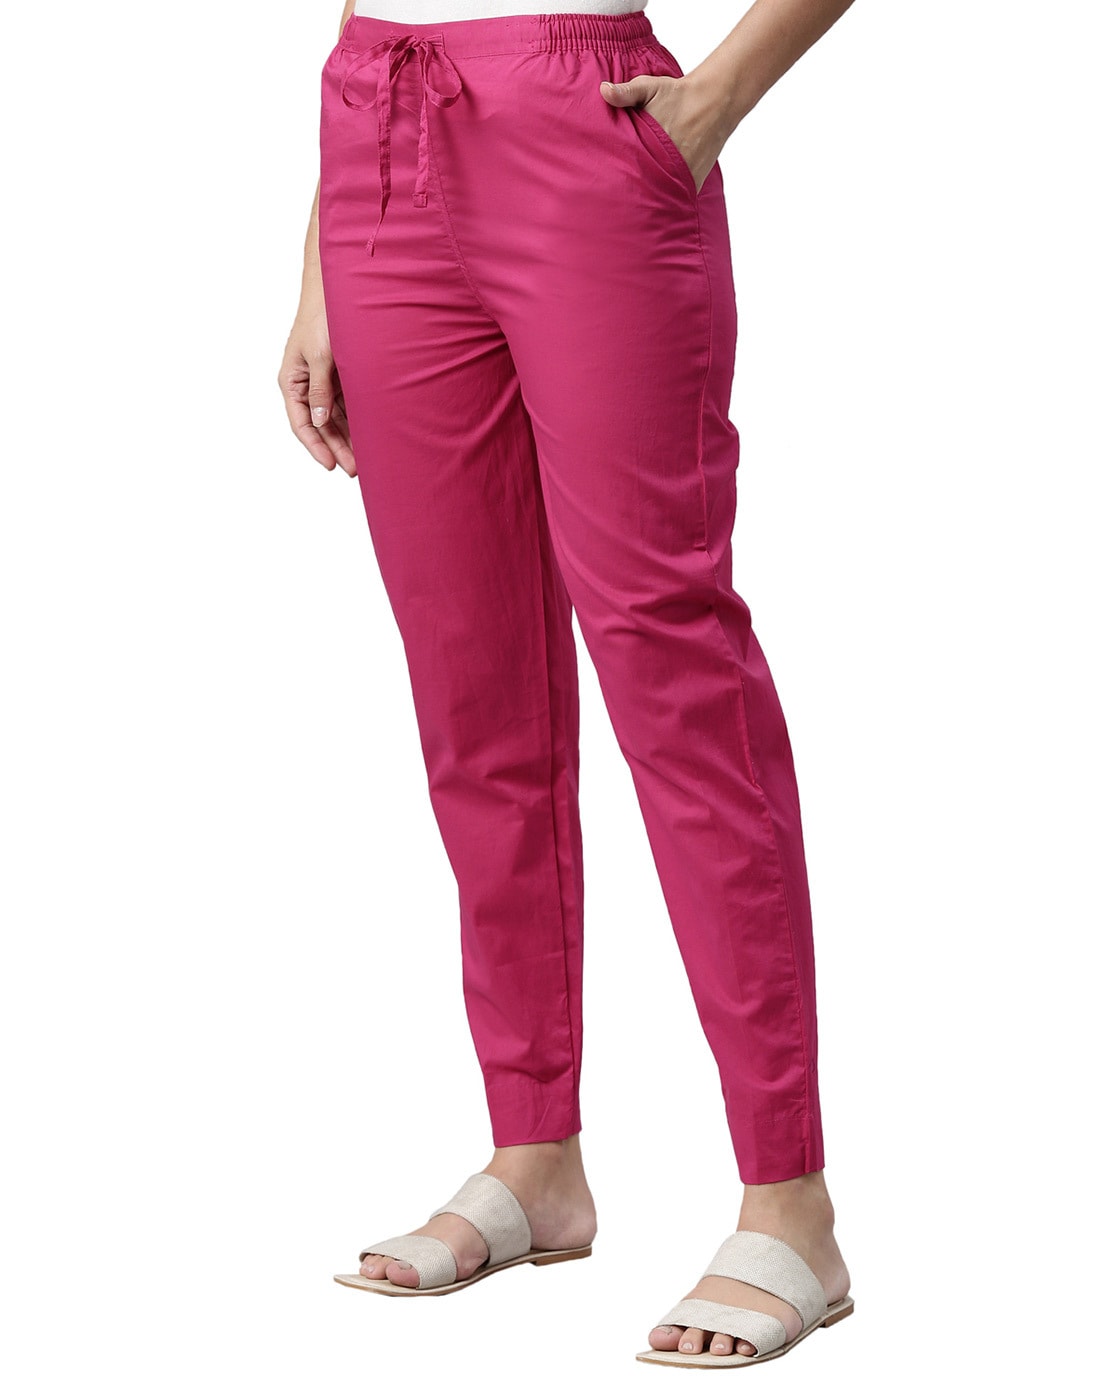 Buy Go Colors Fucshia Free Size Harem Pants Online at Bewakoof